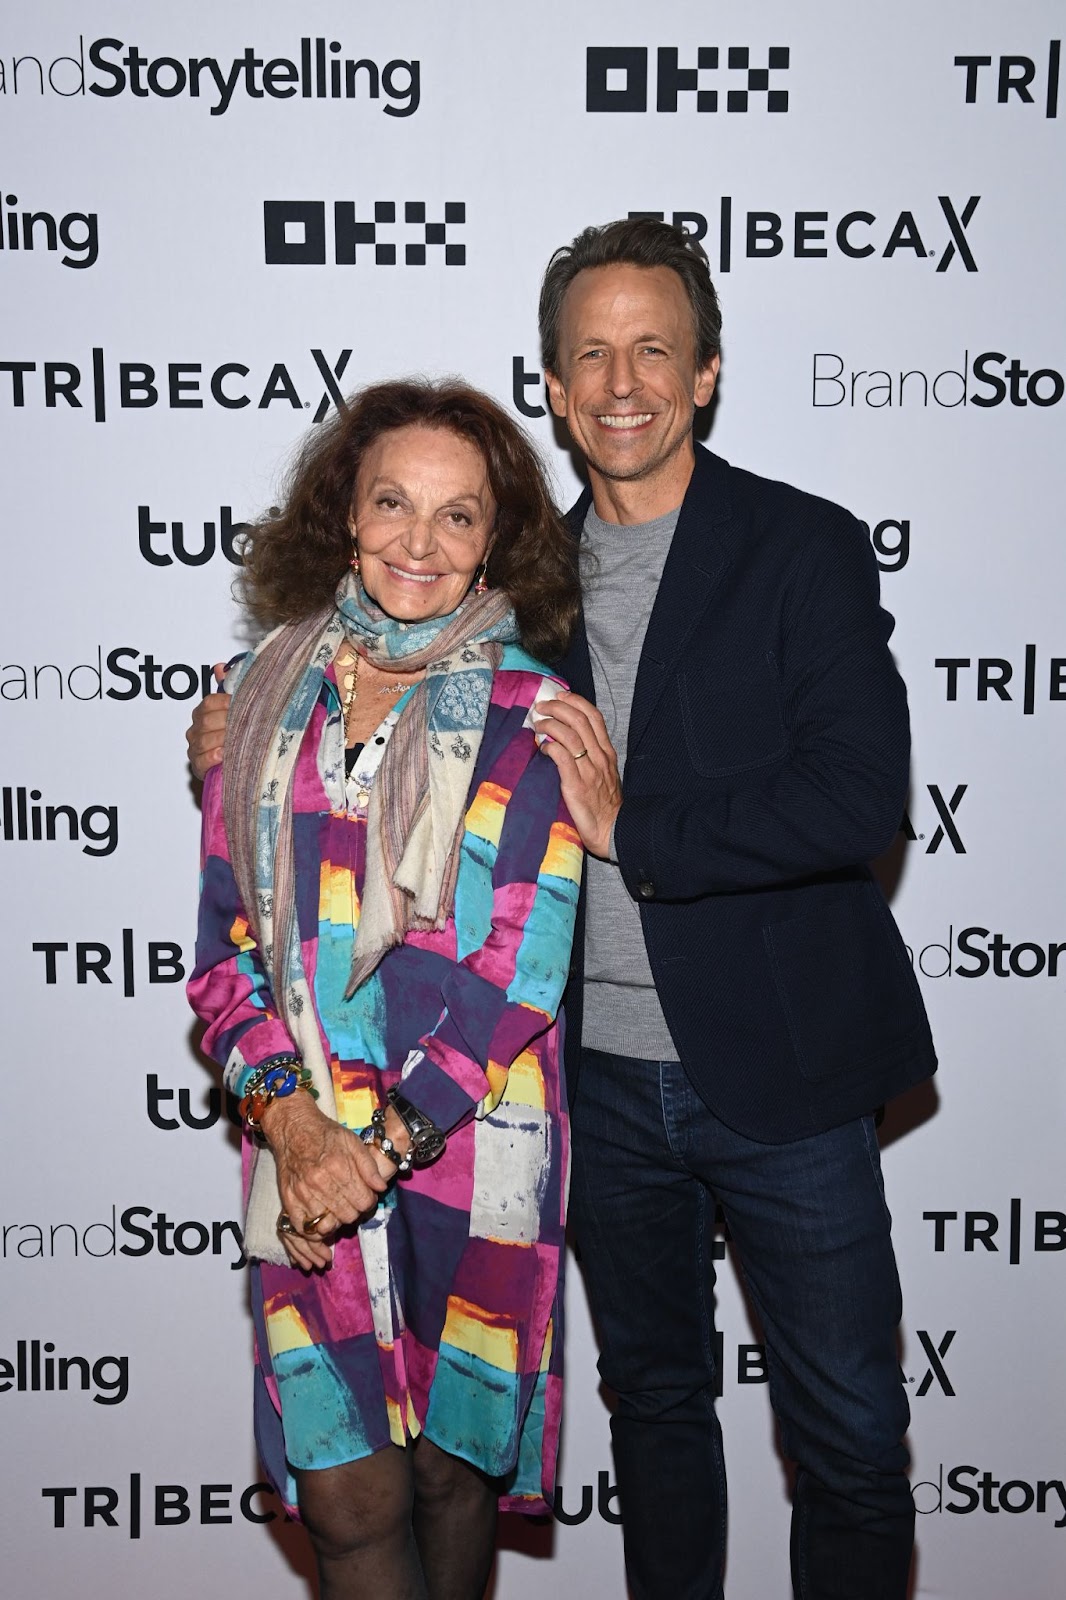 Tribeca Film Festival Presented 'Tribeca X' and Announced Award Winners